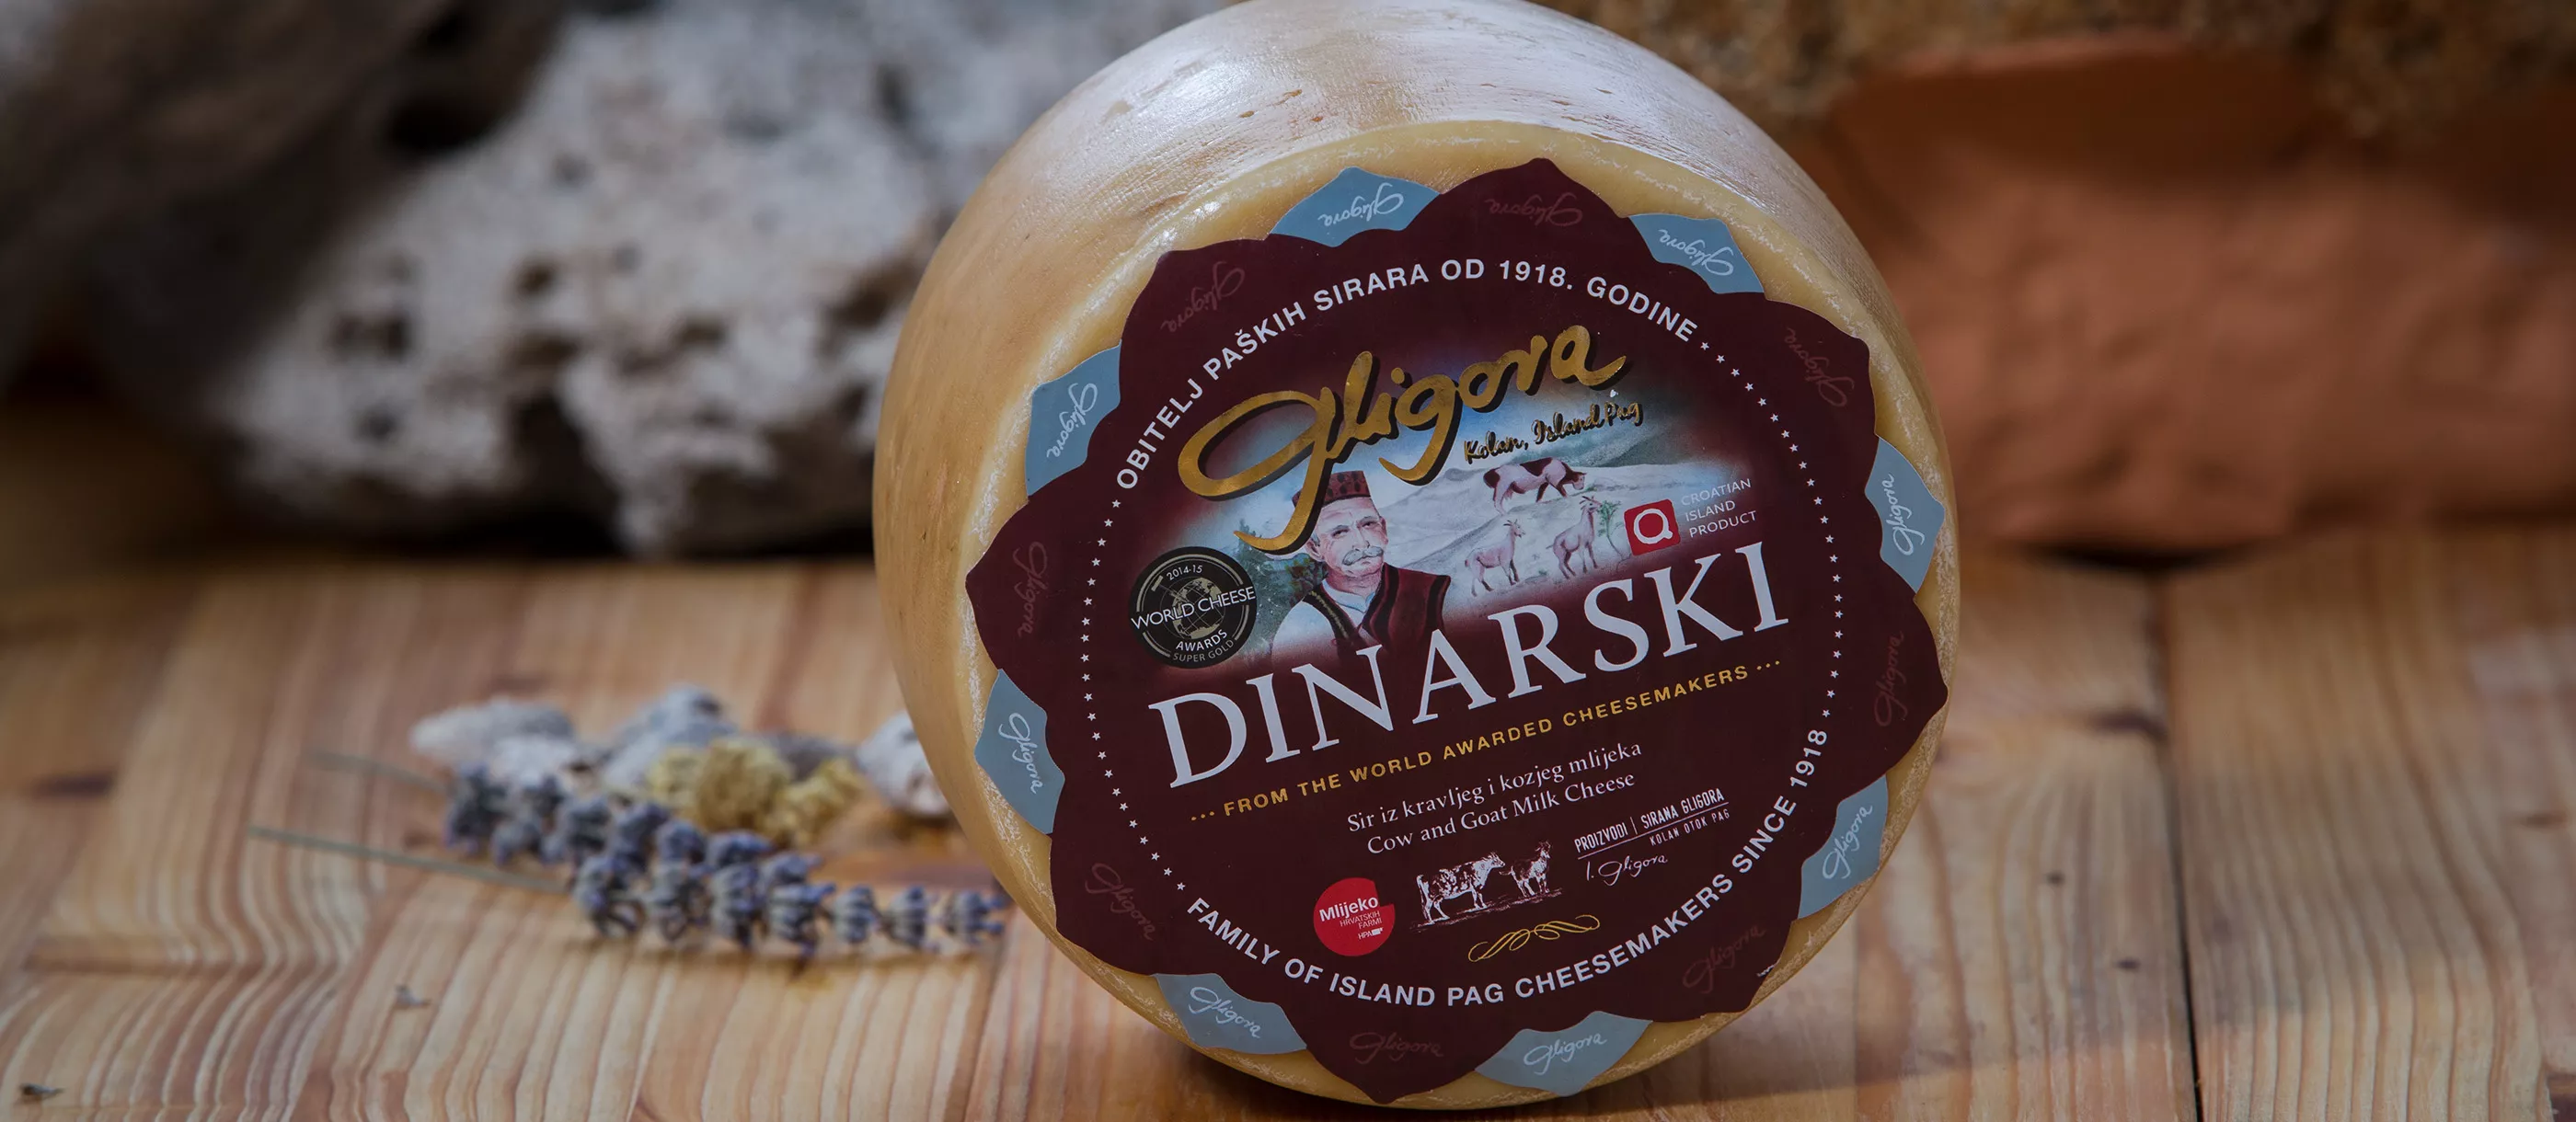 Sirana Gligora in Croatia, Europe | Cheesemakers - Rated 4.8